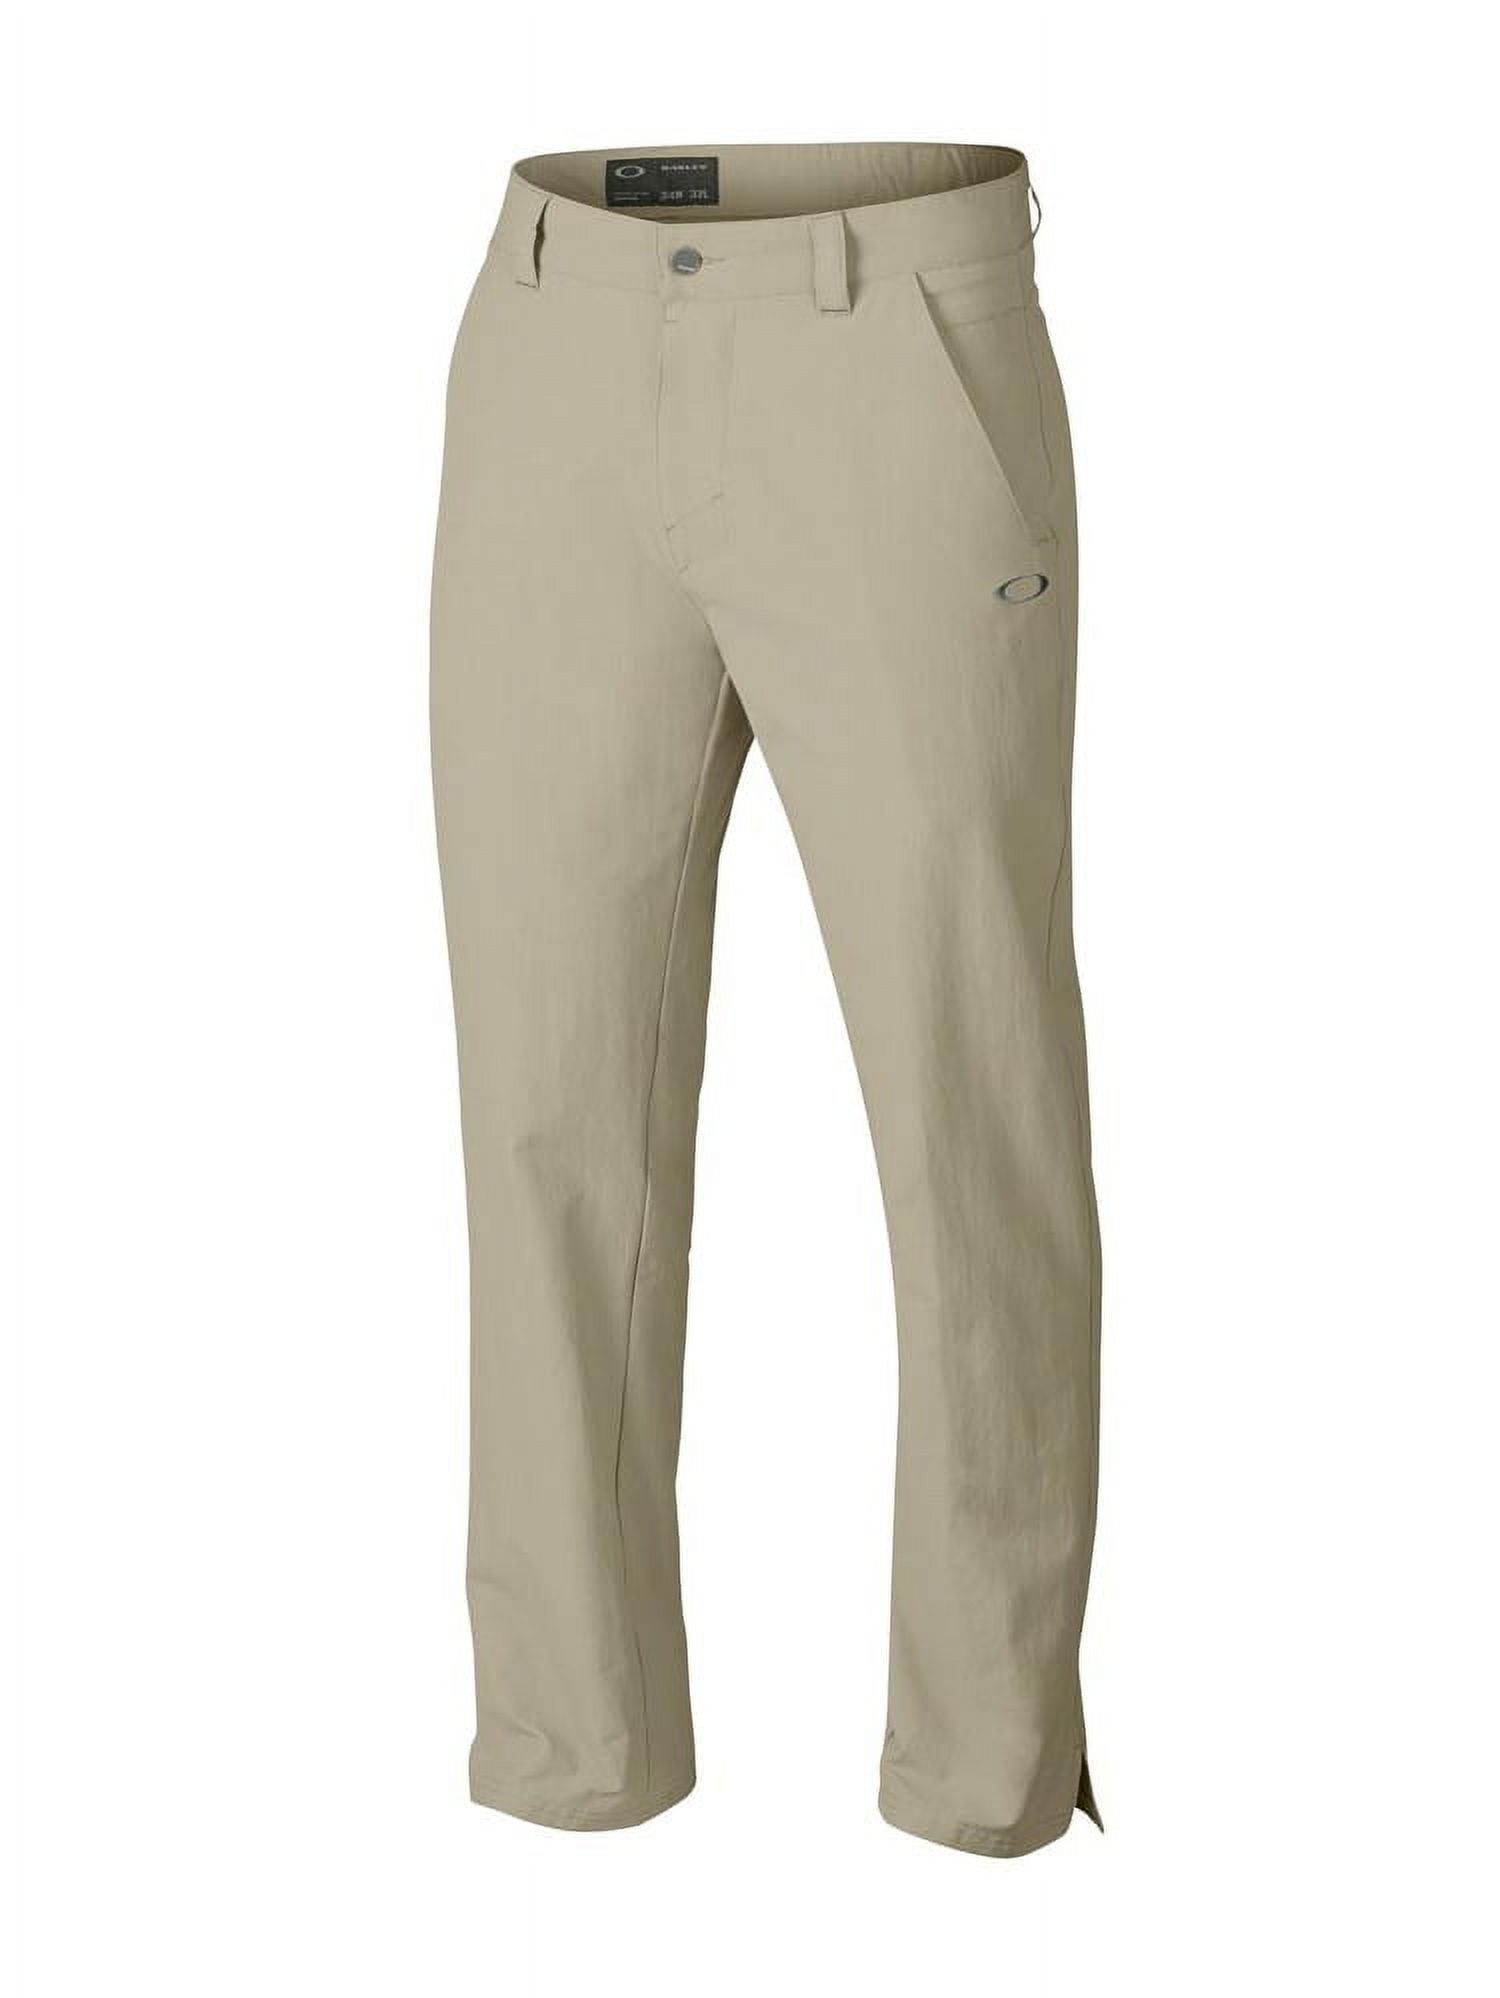 All In Motion Golf Pants 38 X 30 Khaki Moisture Wicking UPF 50+ Quick Dry  Mens